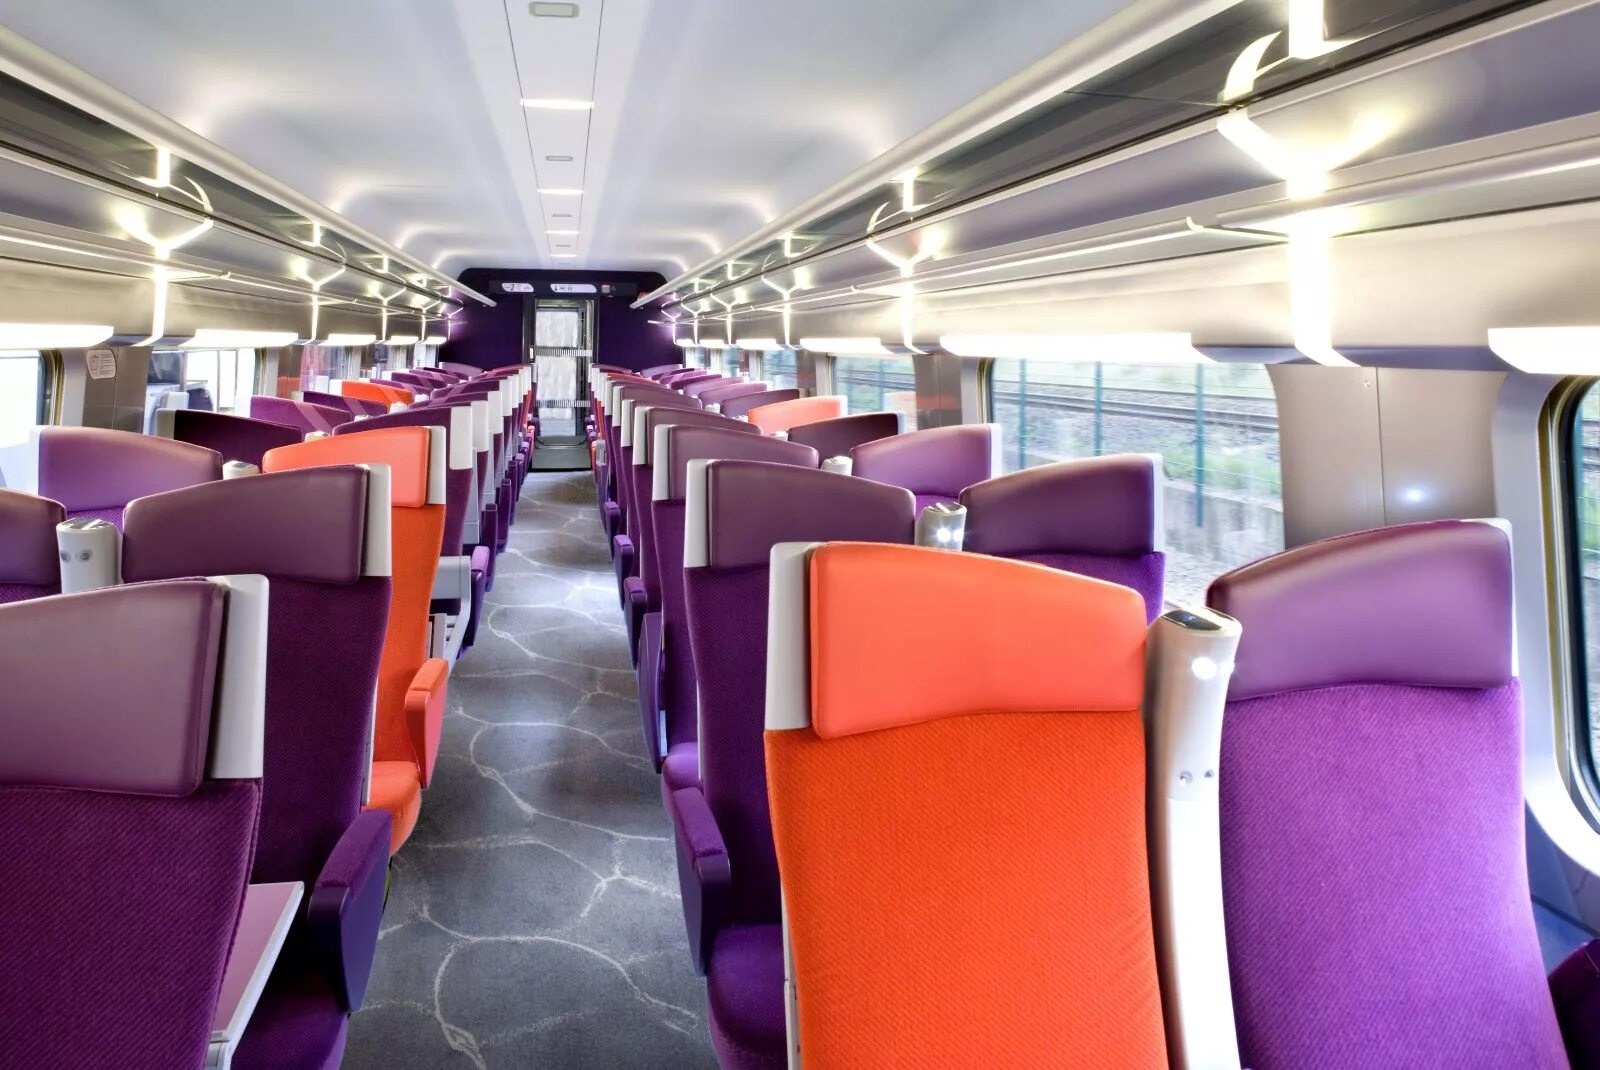 Вагон скоростного поезда. Скоростной поезд TGV Франция. TGV France внутри. TGV Lyria внутри. Французский поезд TGV.